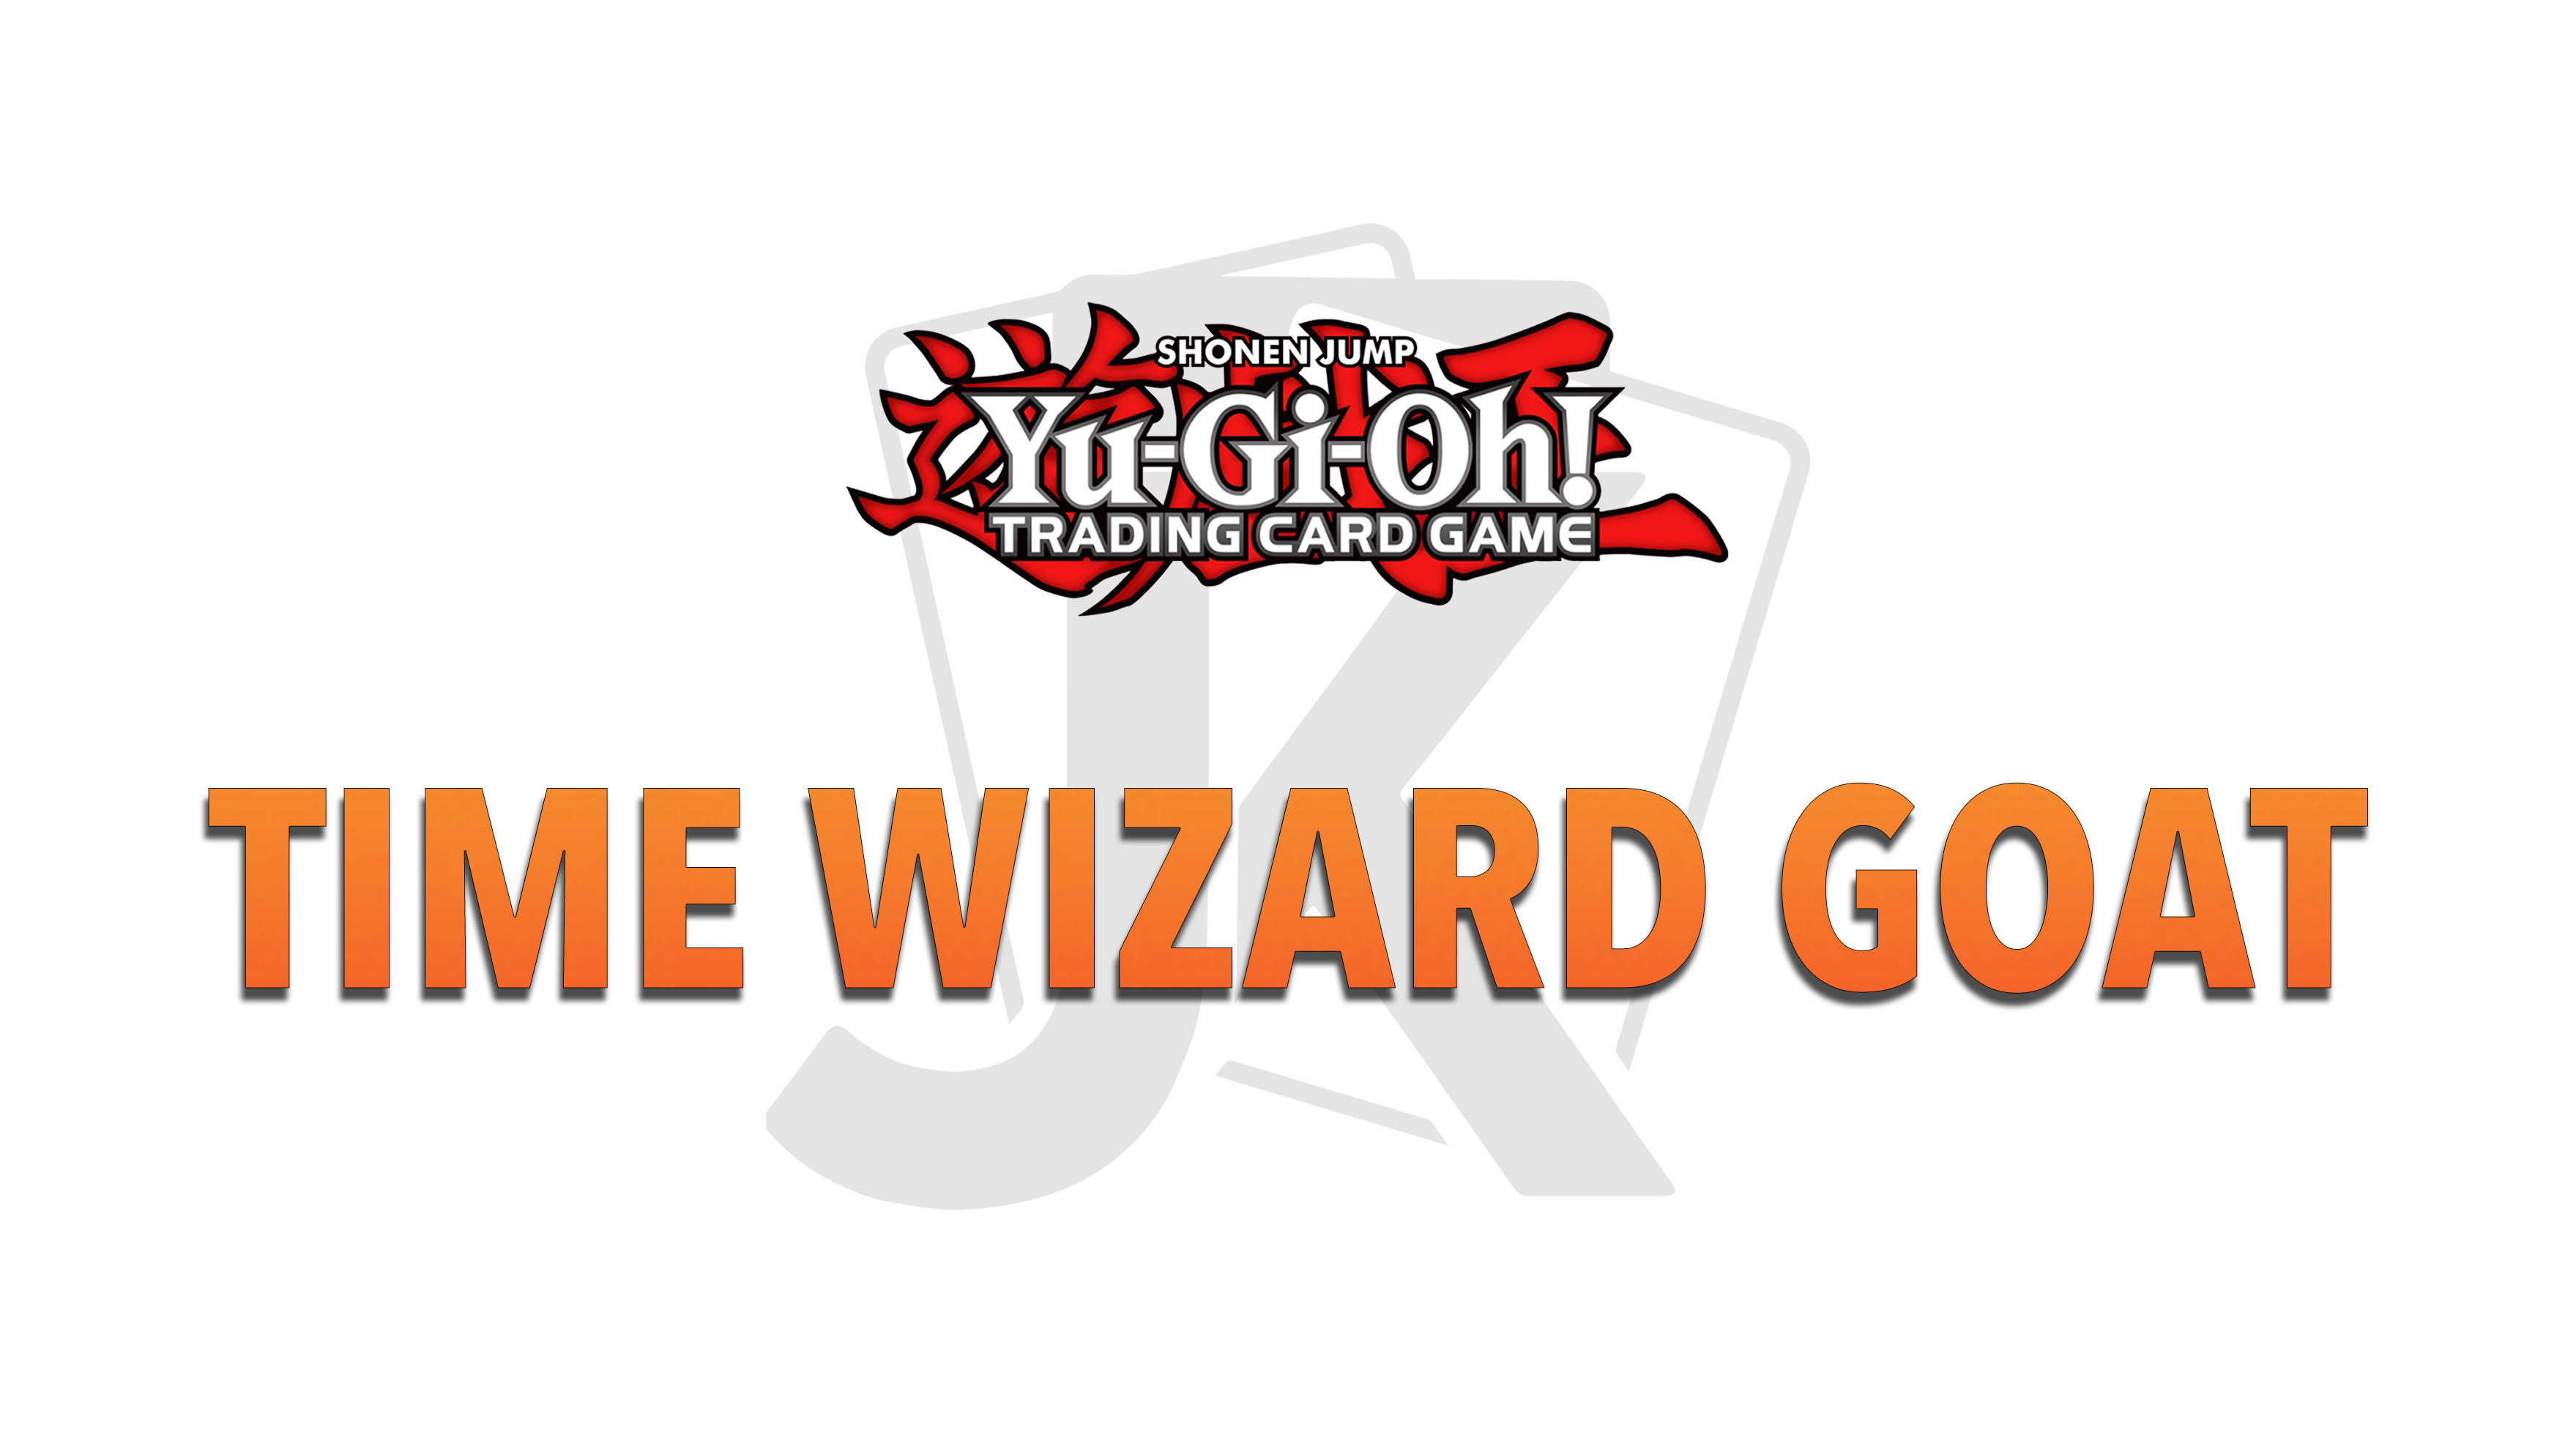 Yu-Gi-Oh! Time Wizard